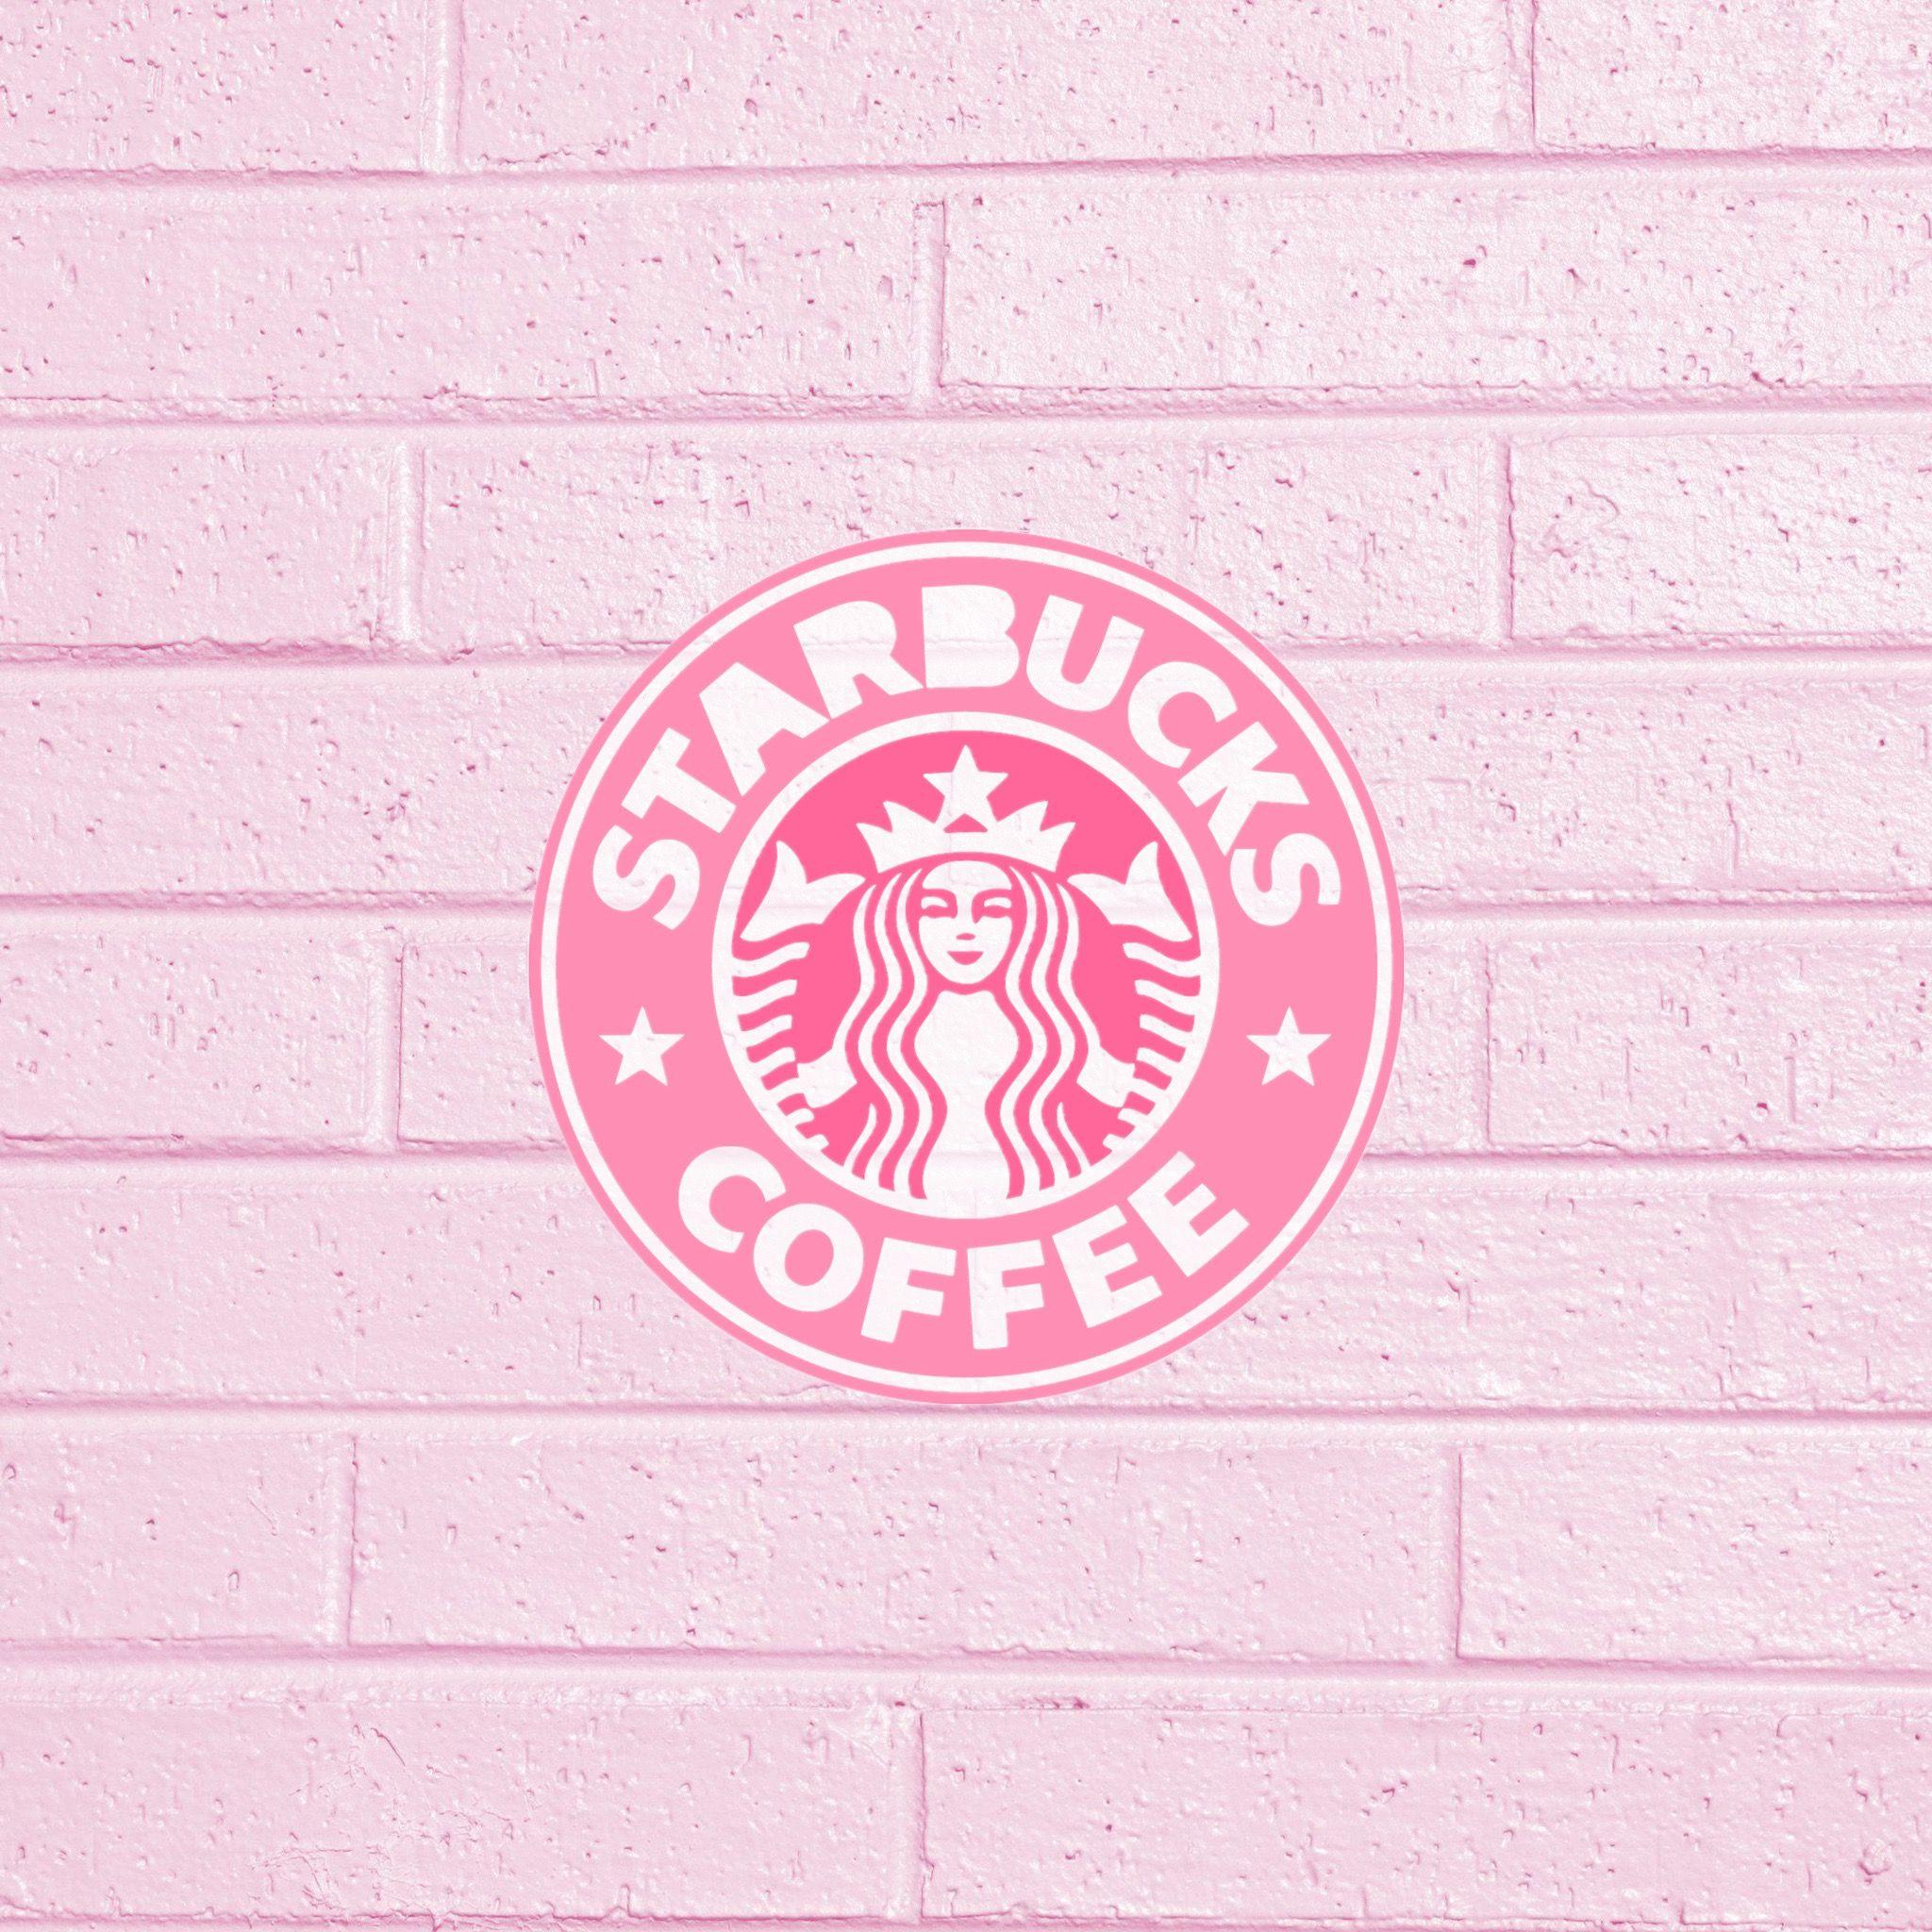 Starbucks Wallpapers  Top 26 Best Starbucks Wallpapers  HQ 